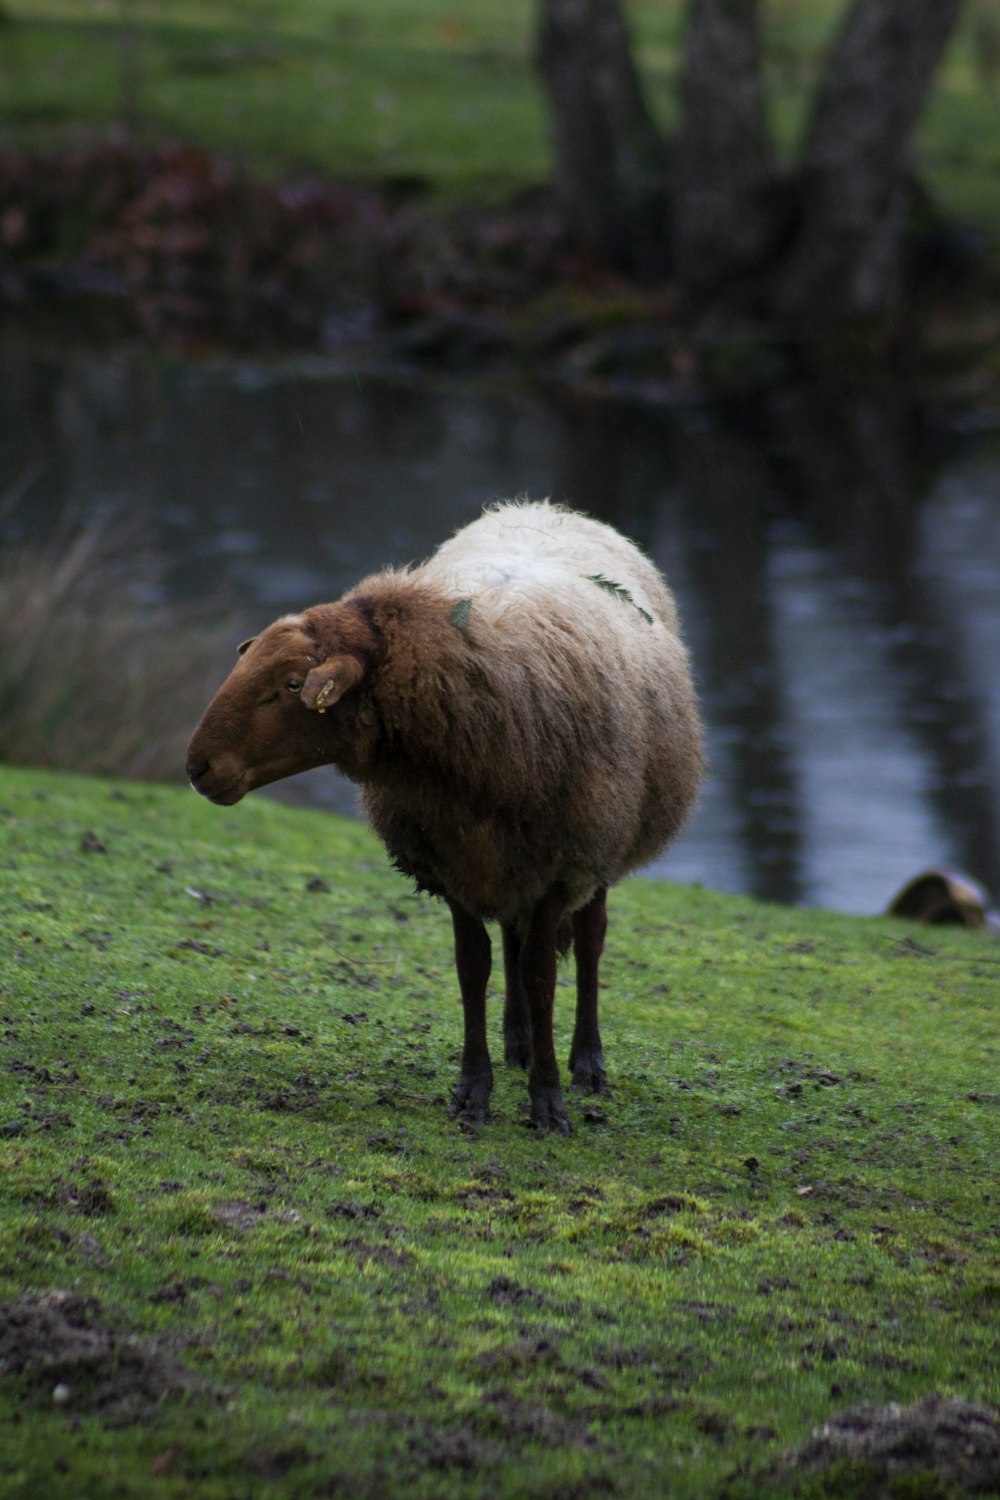 brown sheep on green grass field near lake during daytime